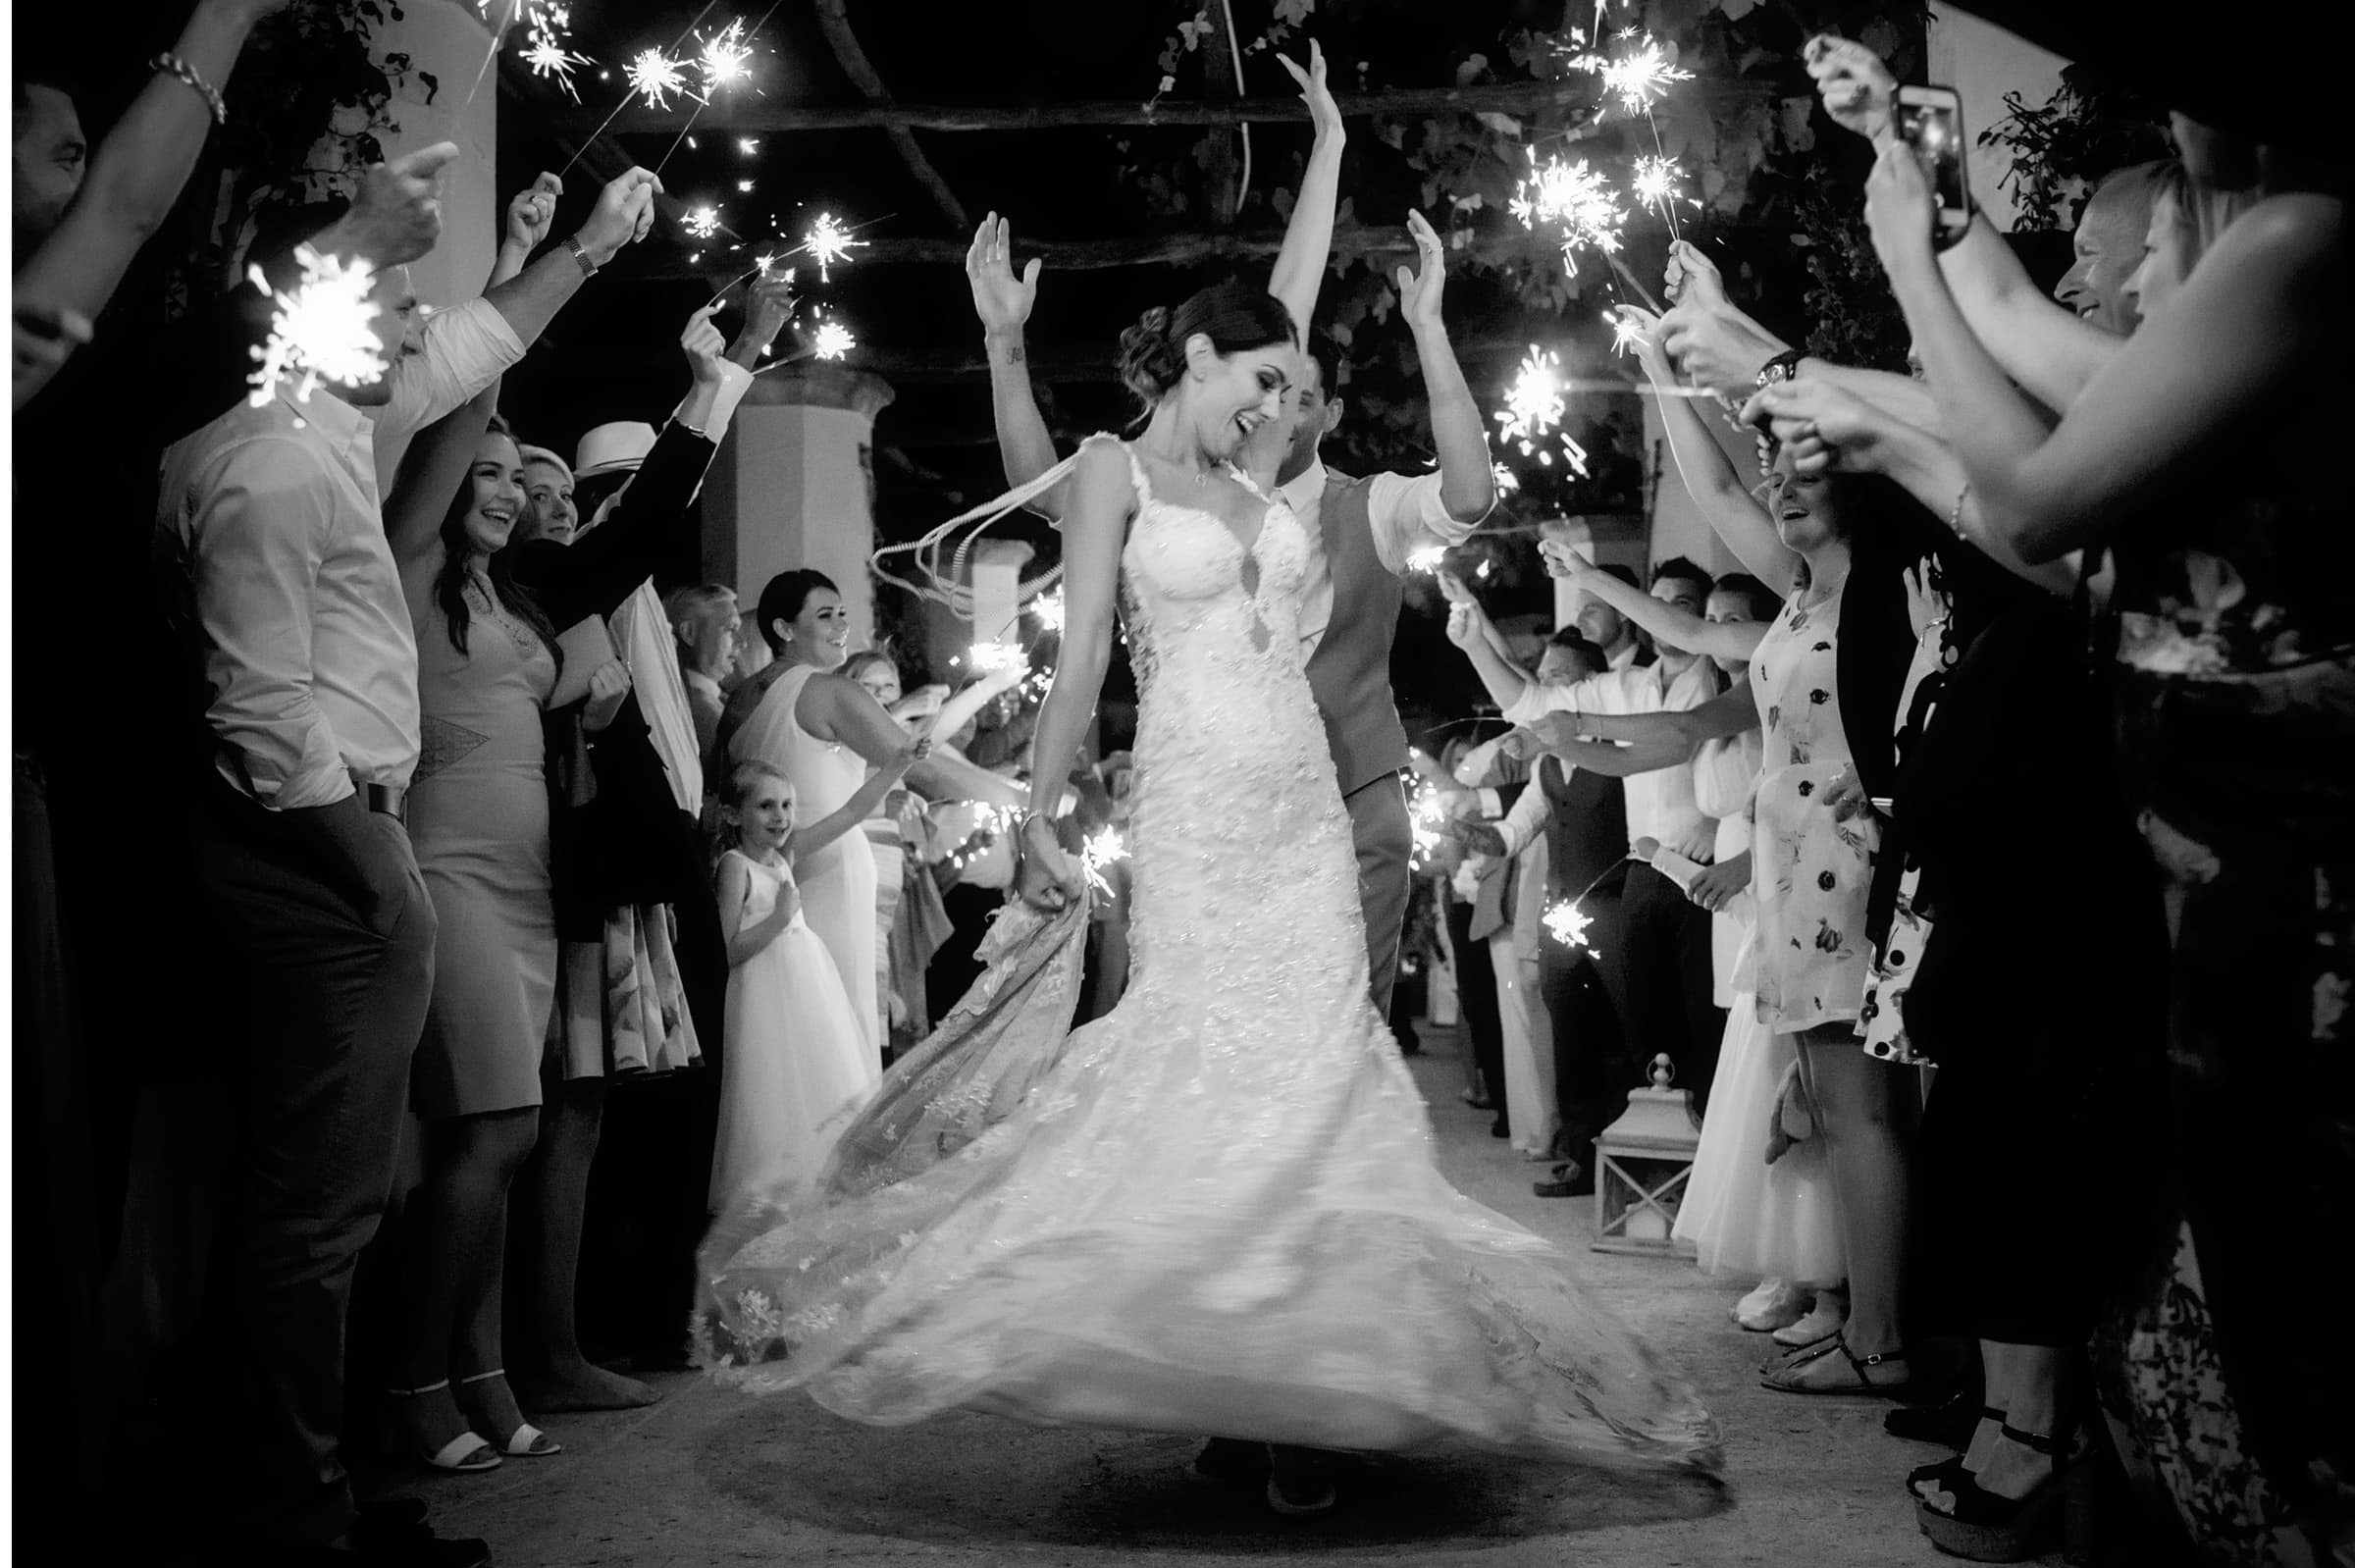 bride dances during sparkler exit at her destination wedding in italy